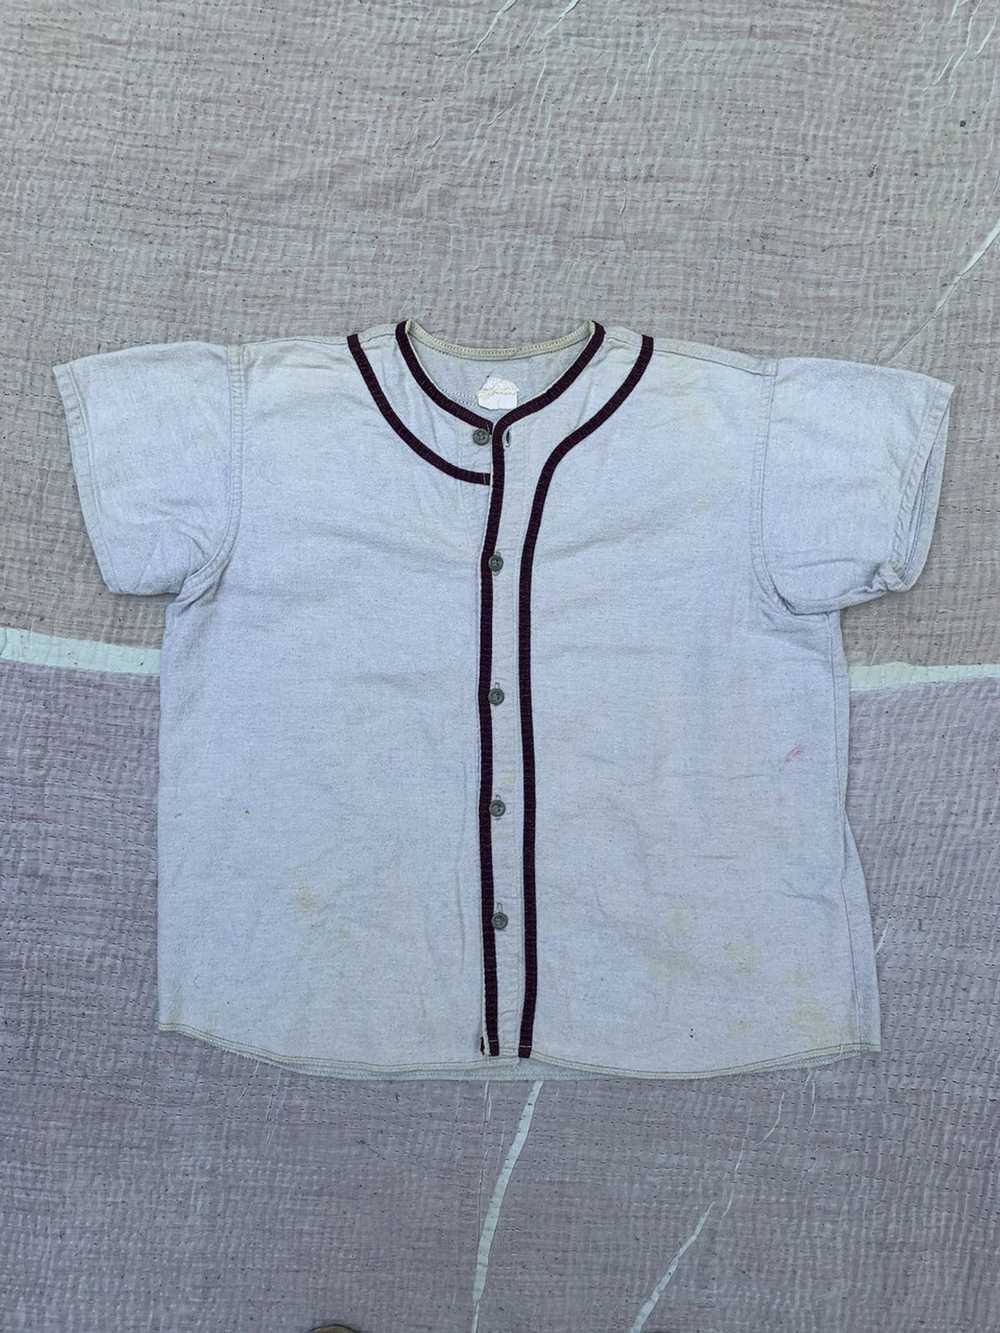 Vintage 1960s Cotton Baseball Jersey - image 1